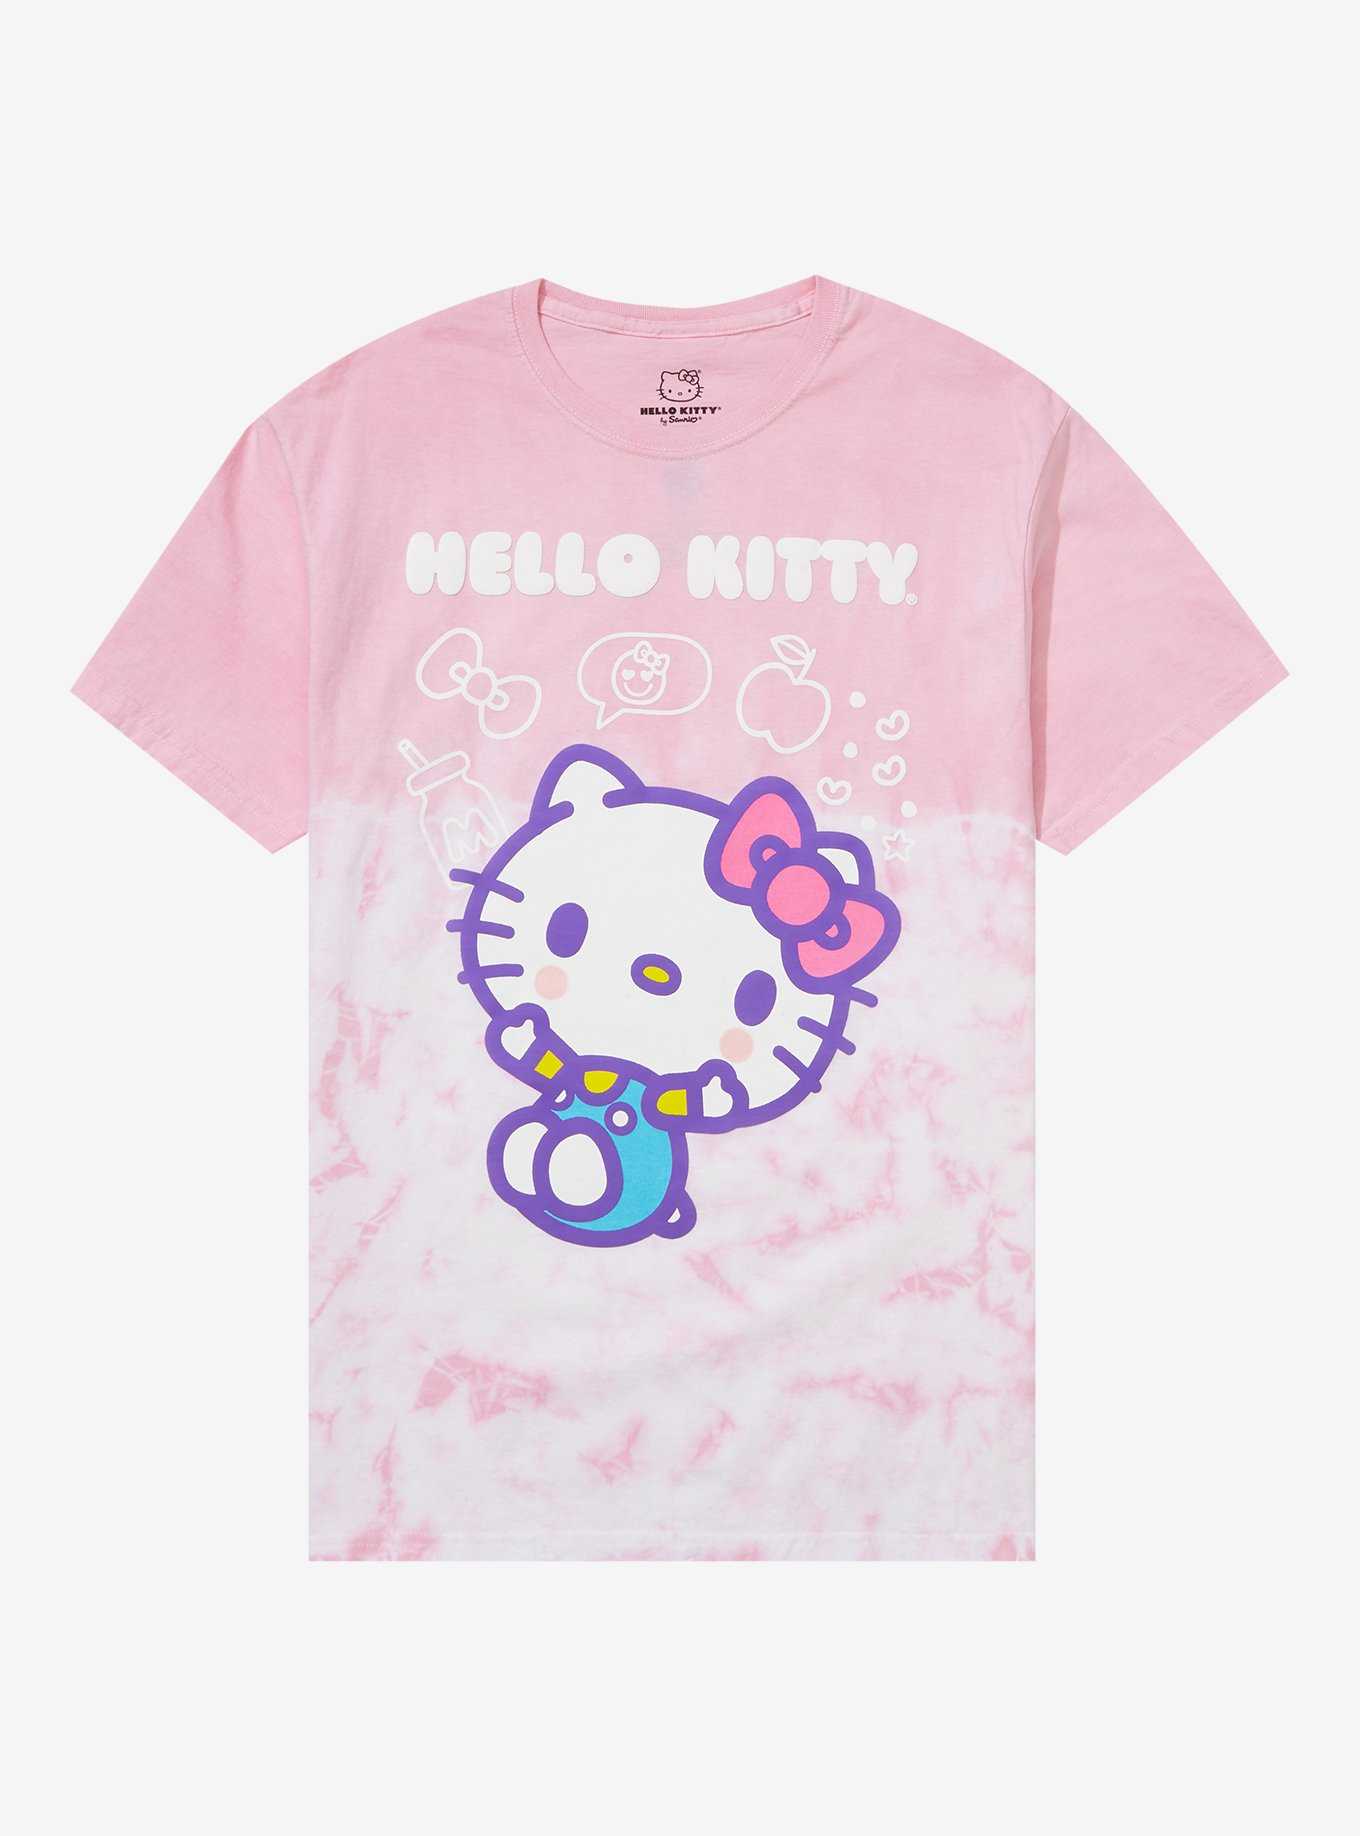 Hello Kitty Chibi Tie-Dye Boyfriend Fit Girls T-Shirt, , hi-res